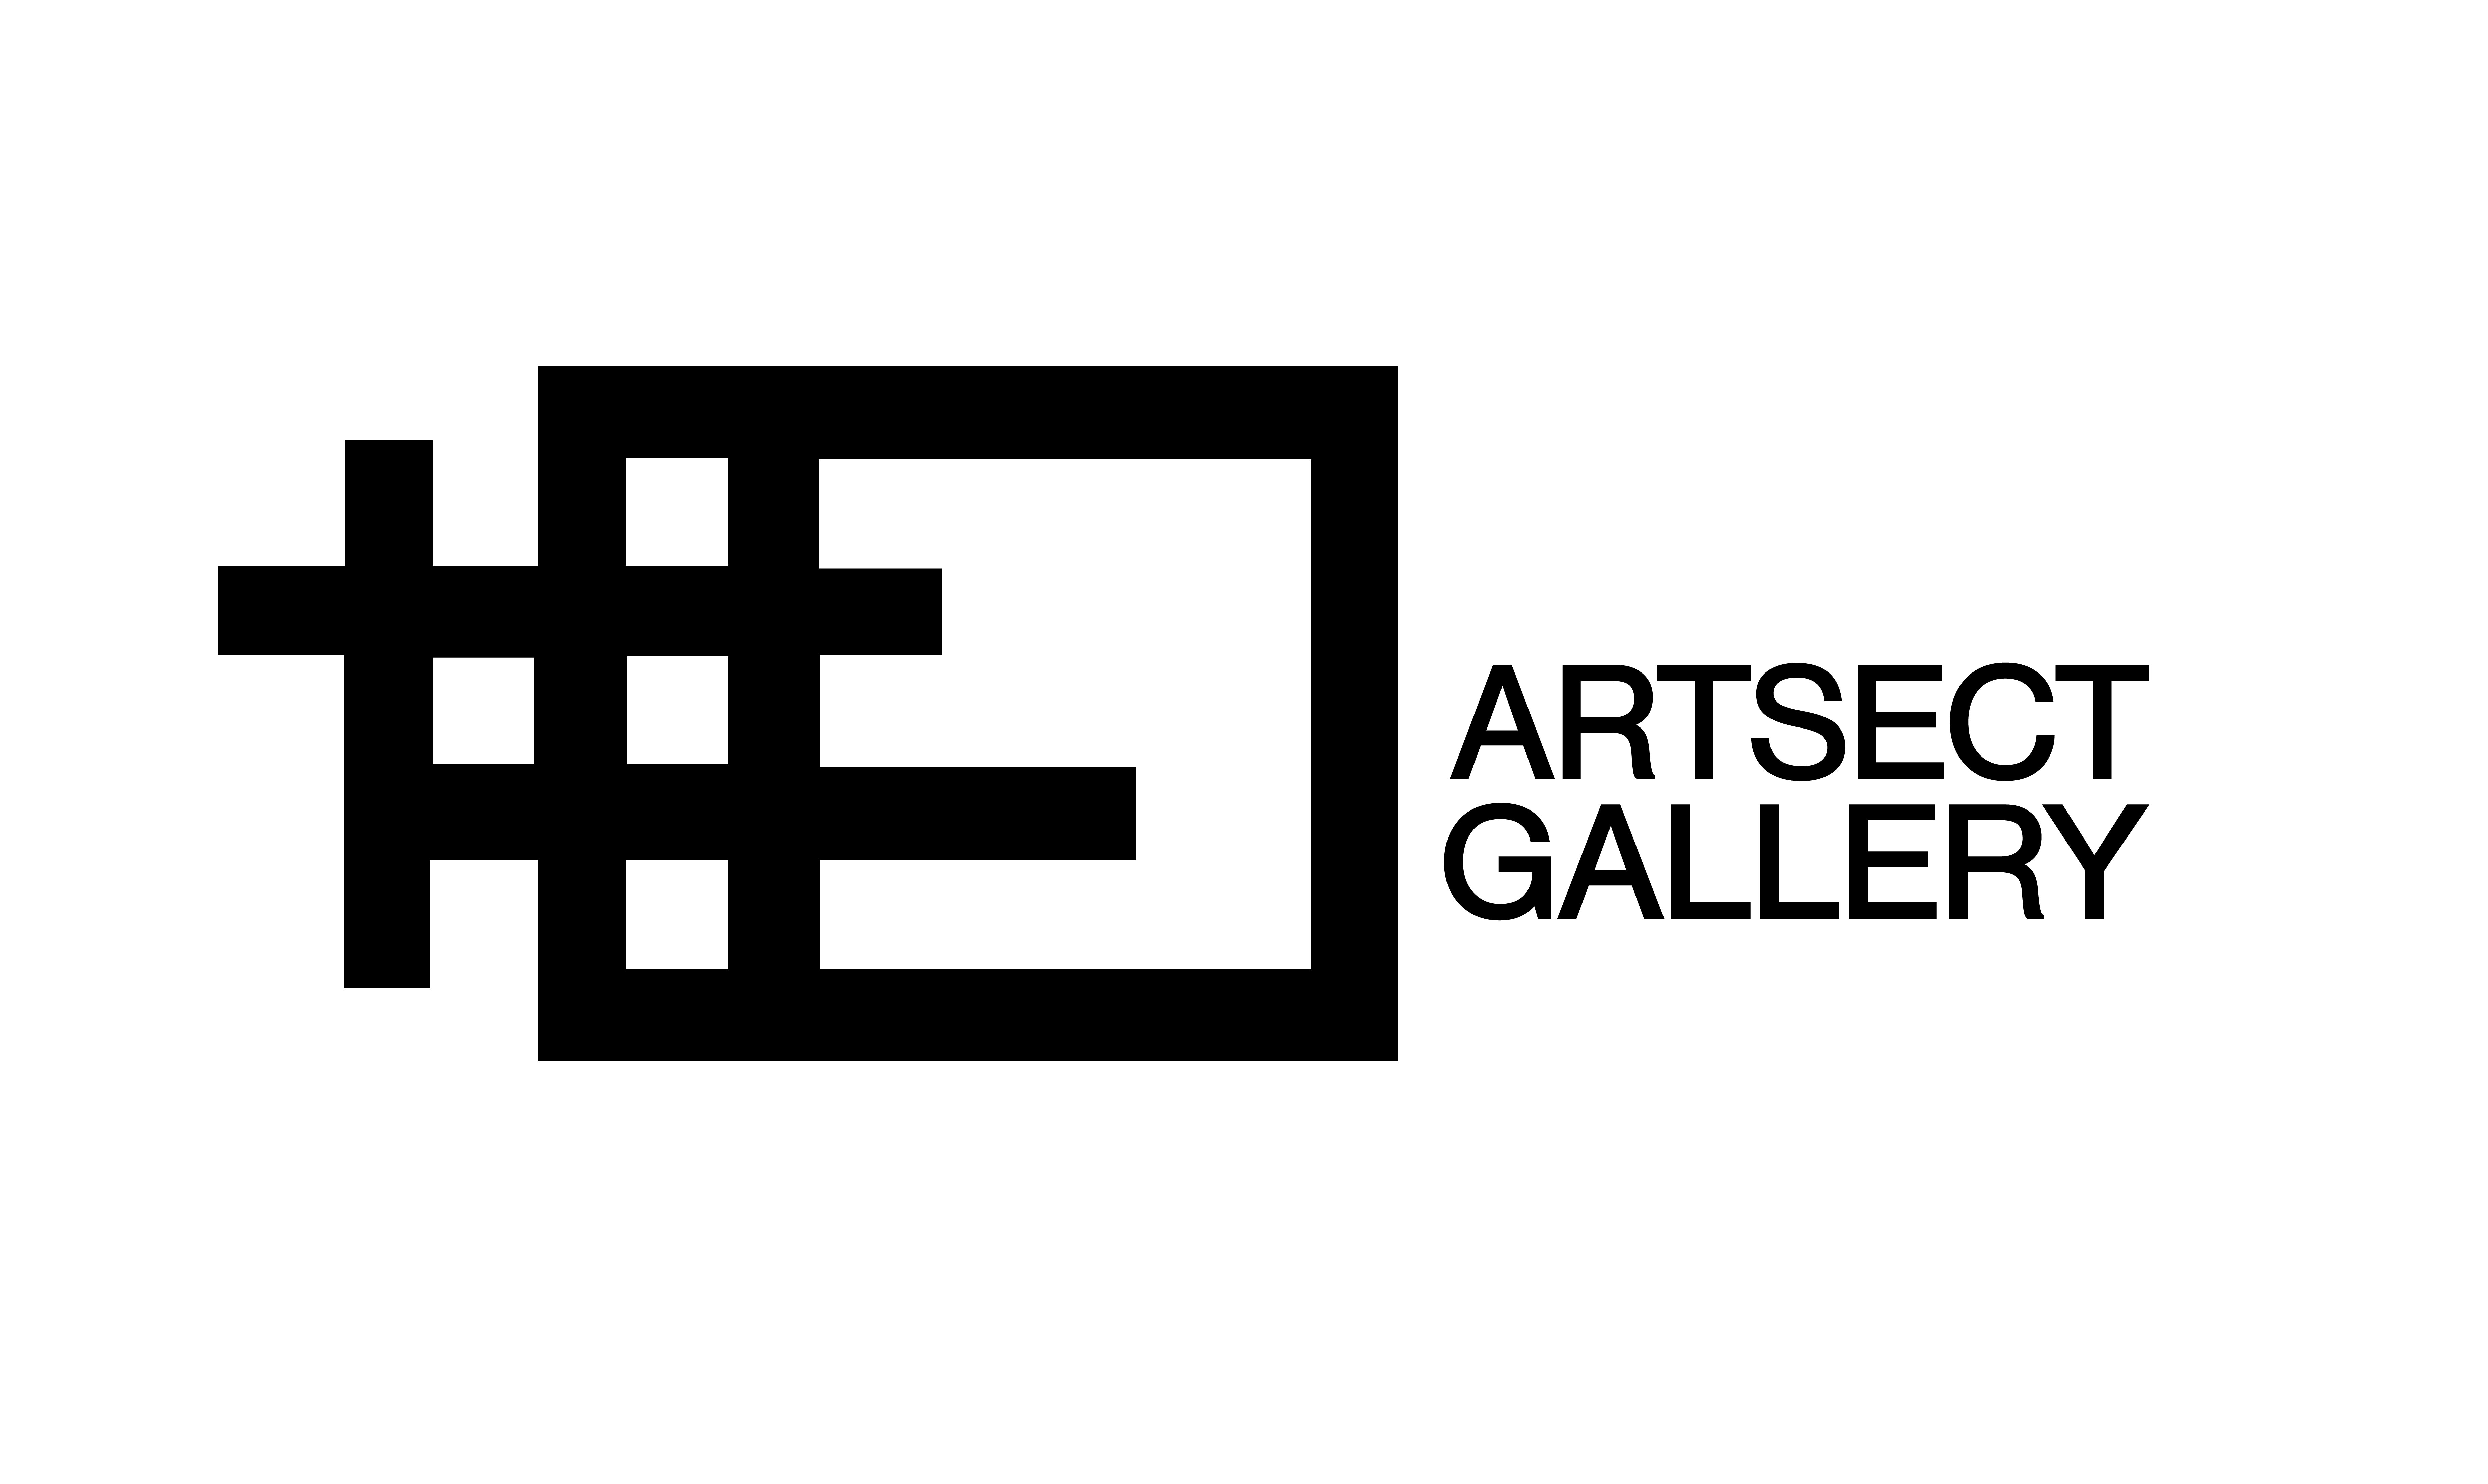 Artsect Gallery